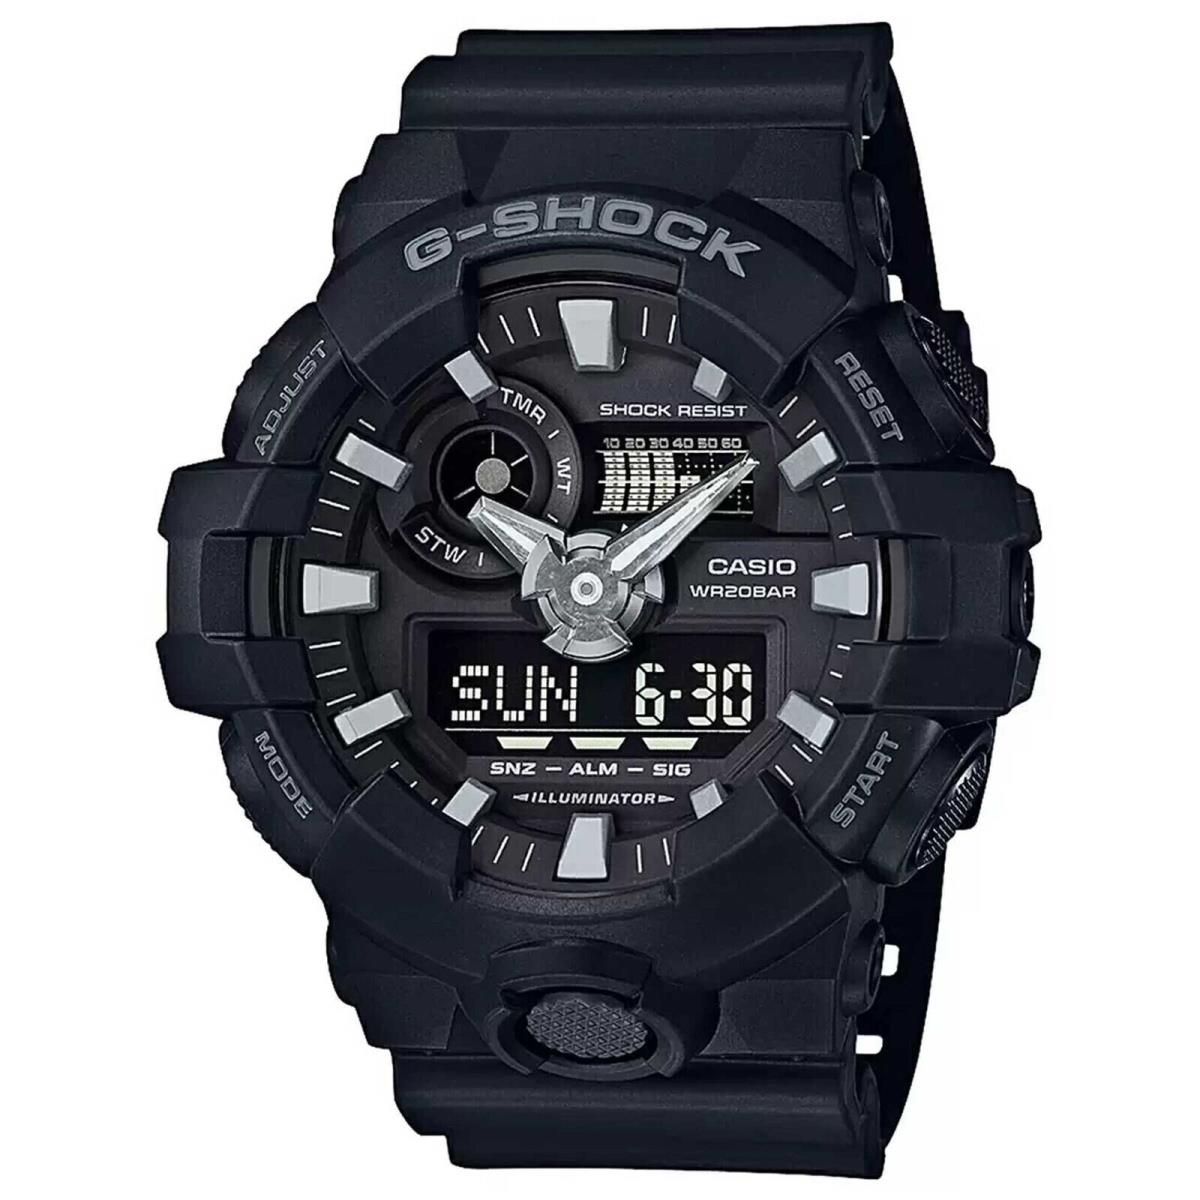 Casio G-shock GA700-1B Super Illuminator Ana-digital 3D Black Men`s Watch - Dial: Black, Band: Black